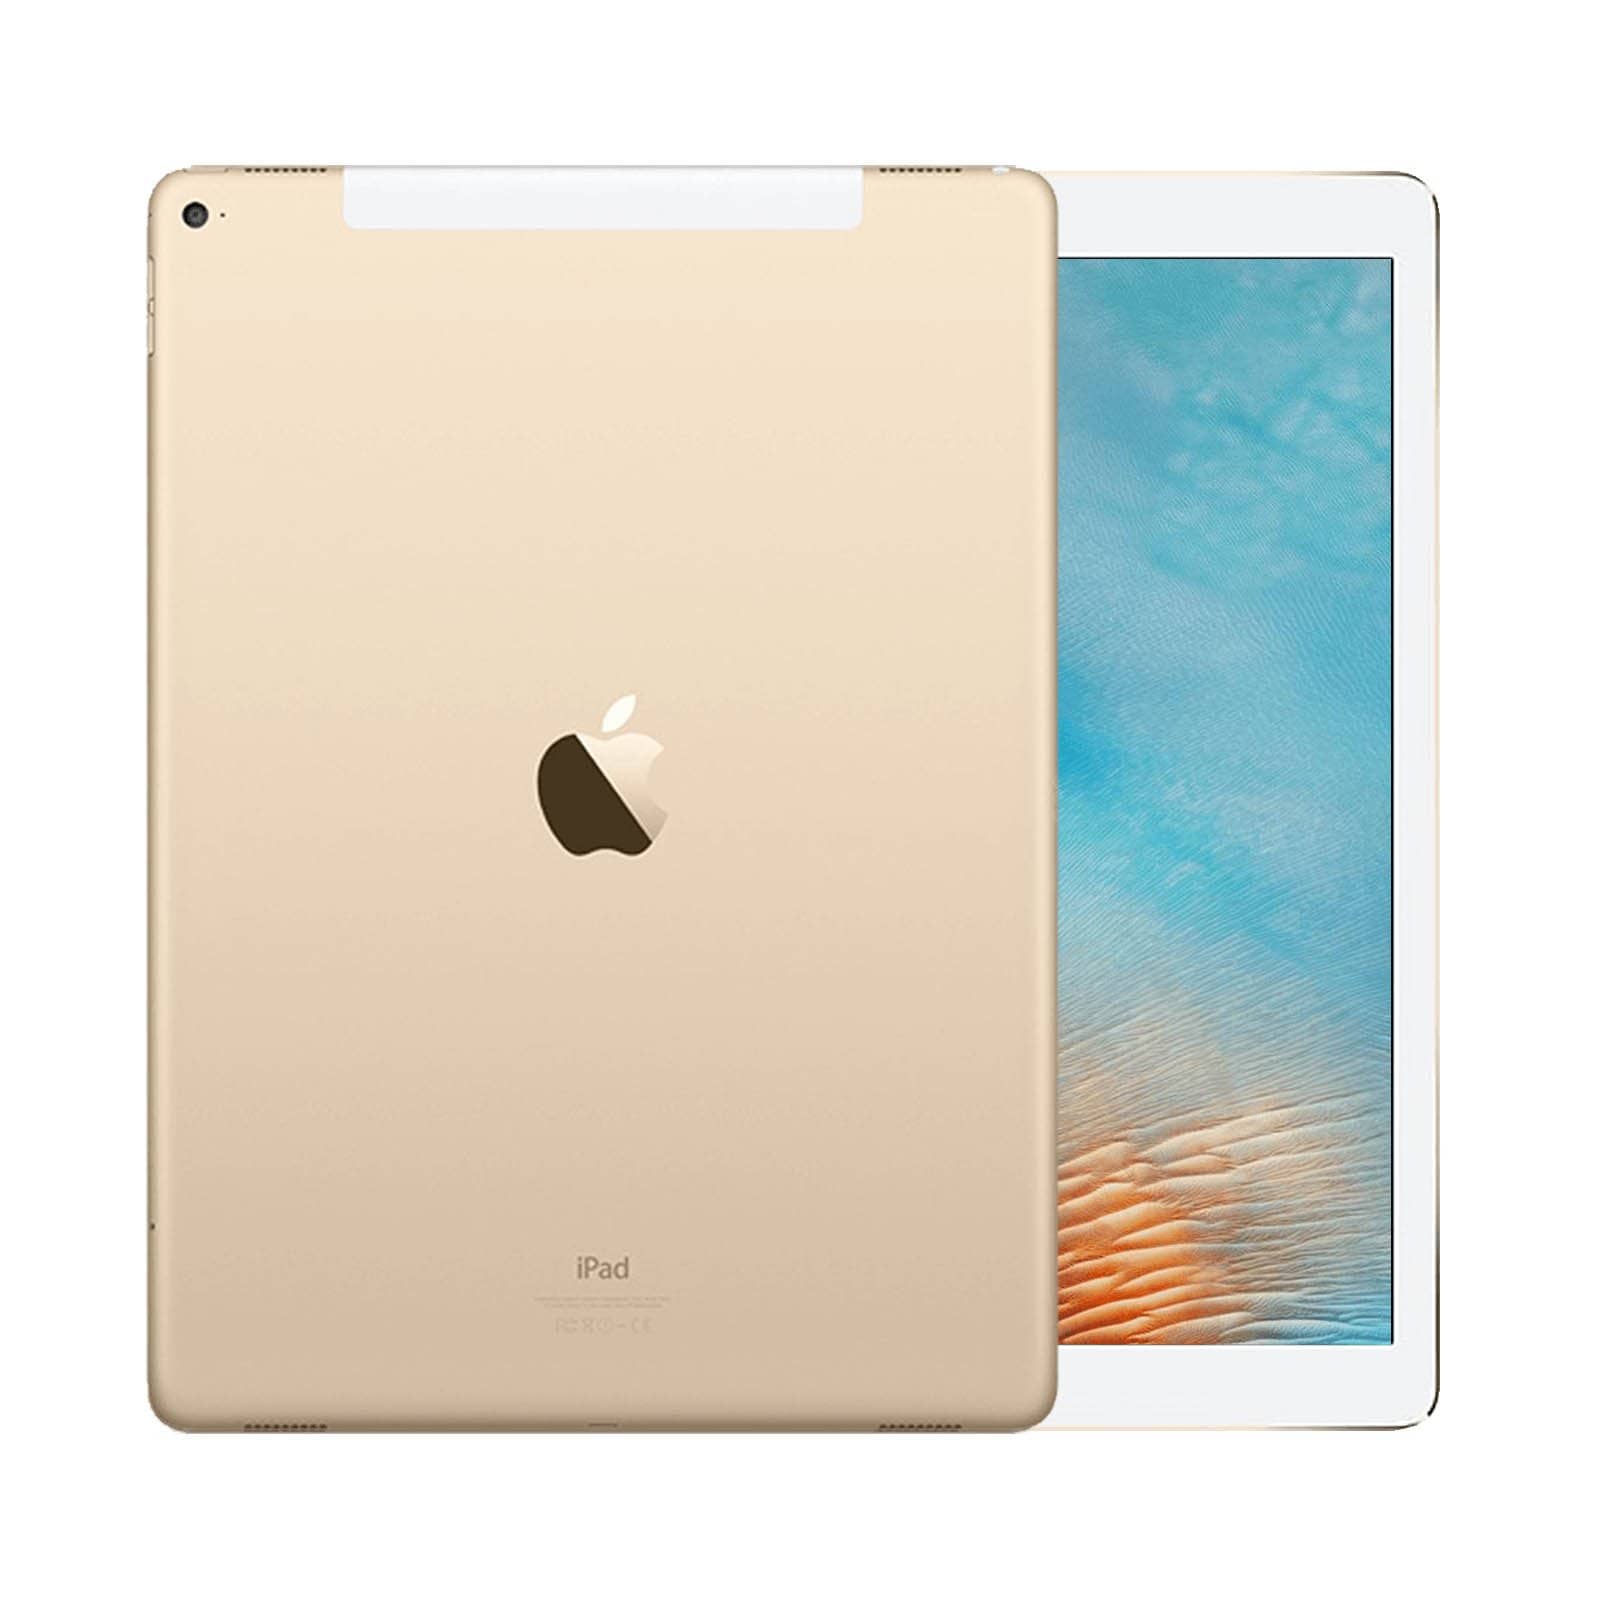 iPad Pro 12.9 Inch 2nd Gen 512GB Gold Pristine - WiFi 512GB Gold Pristine